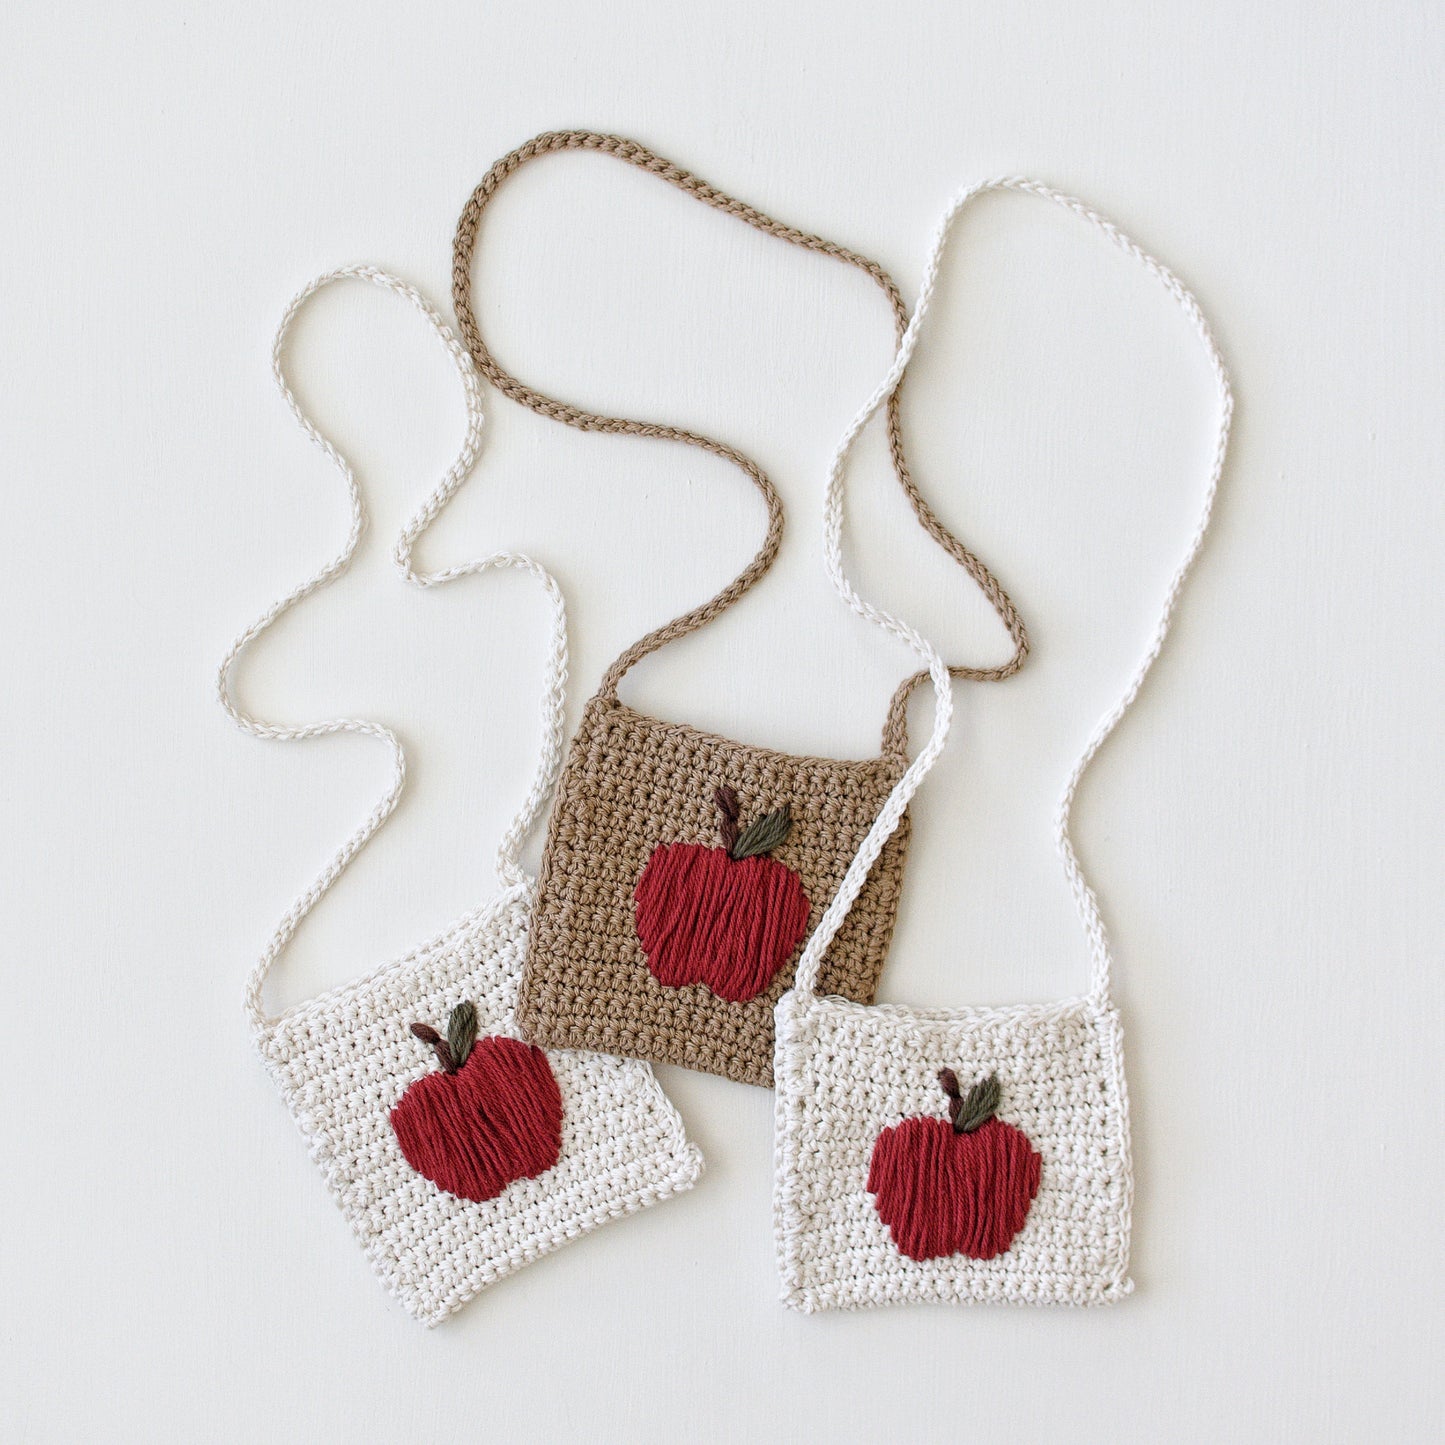 MADE-TO-ORDER CUSTOM Crochet Crossbody Bag